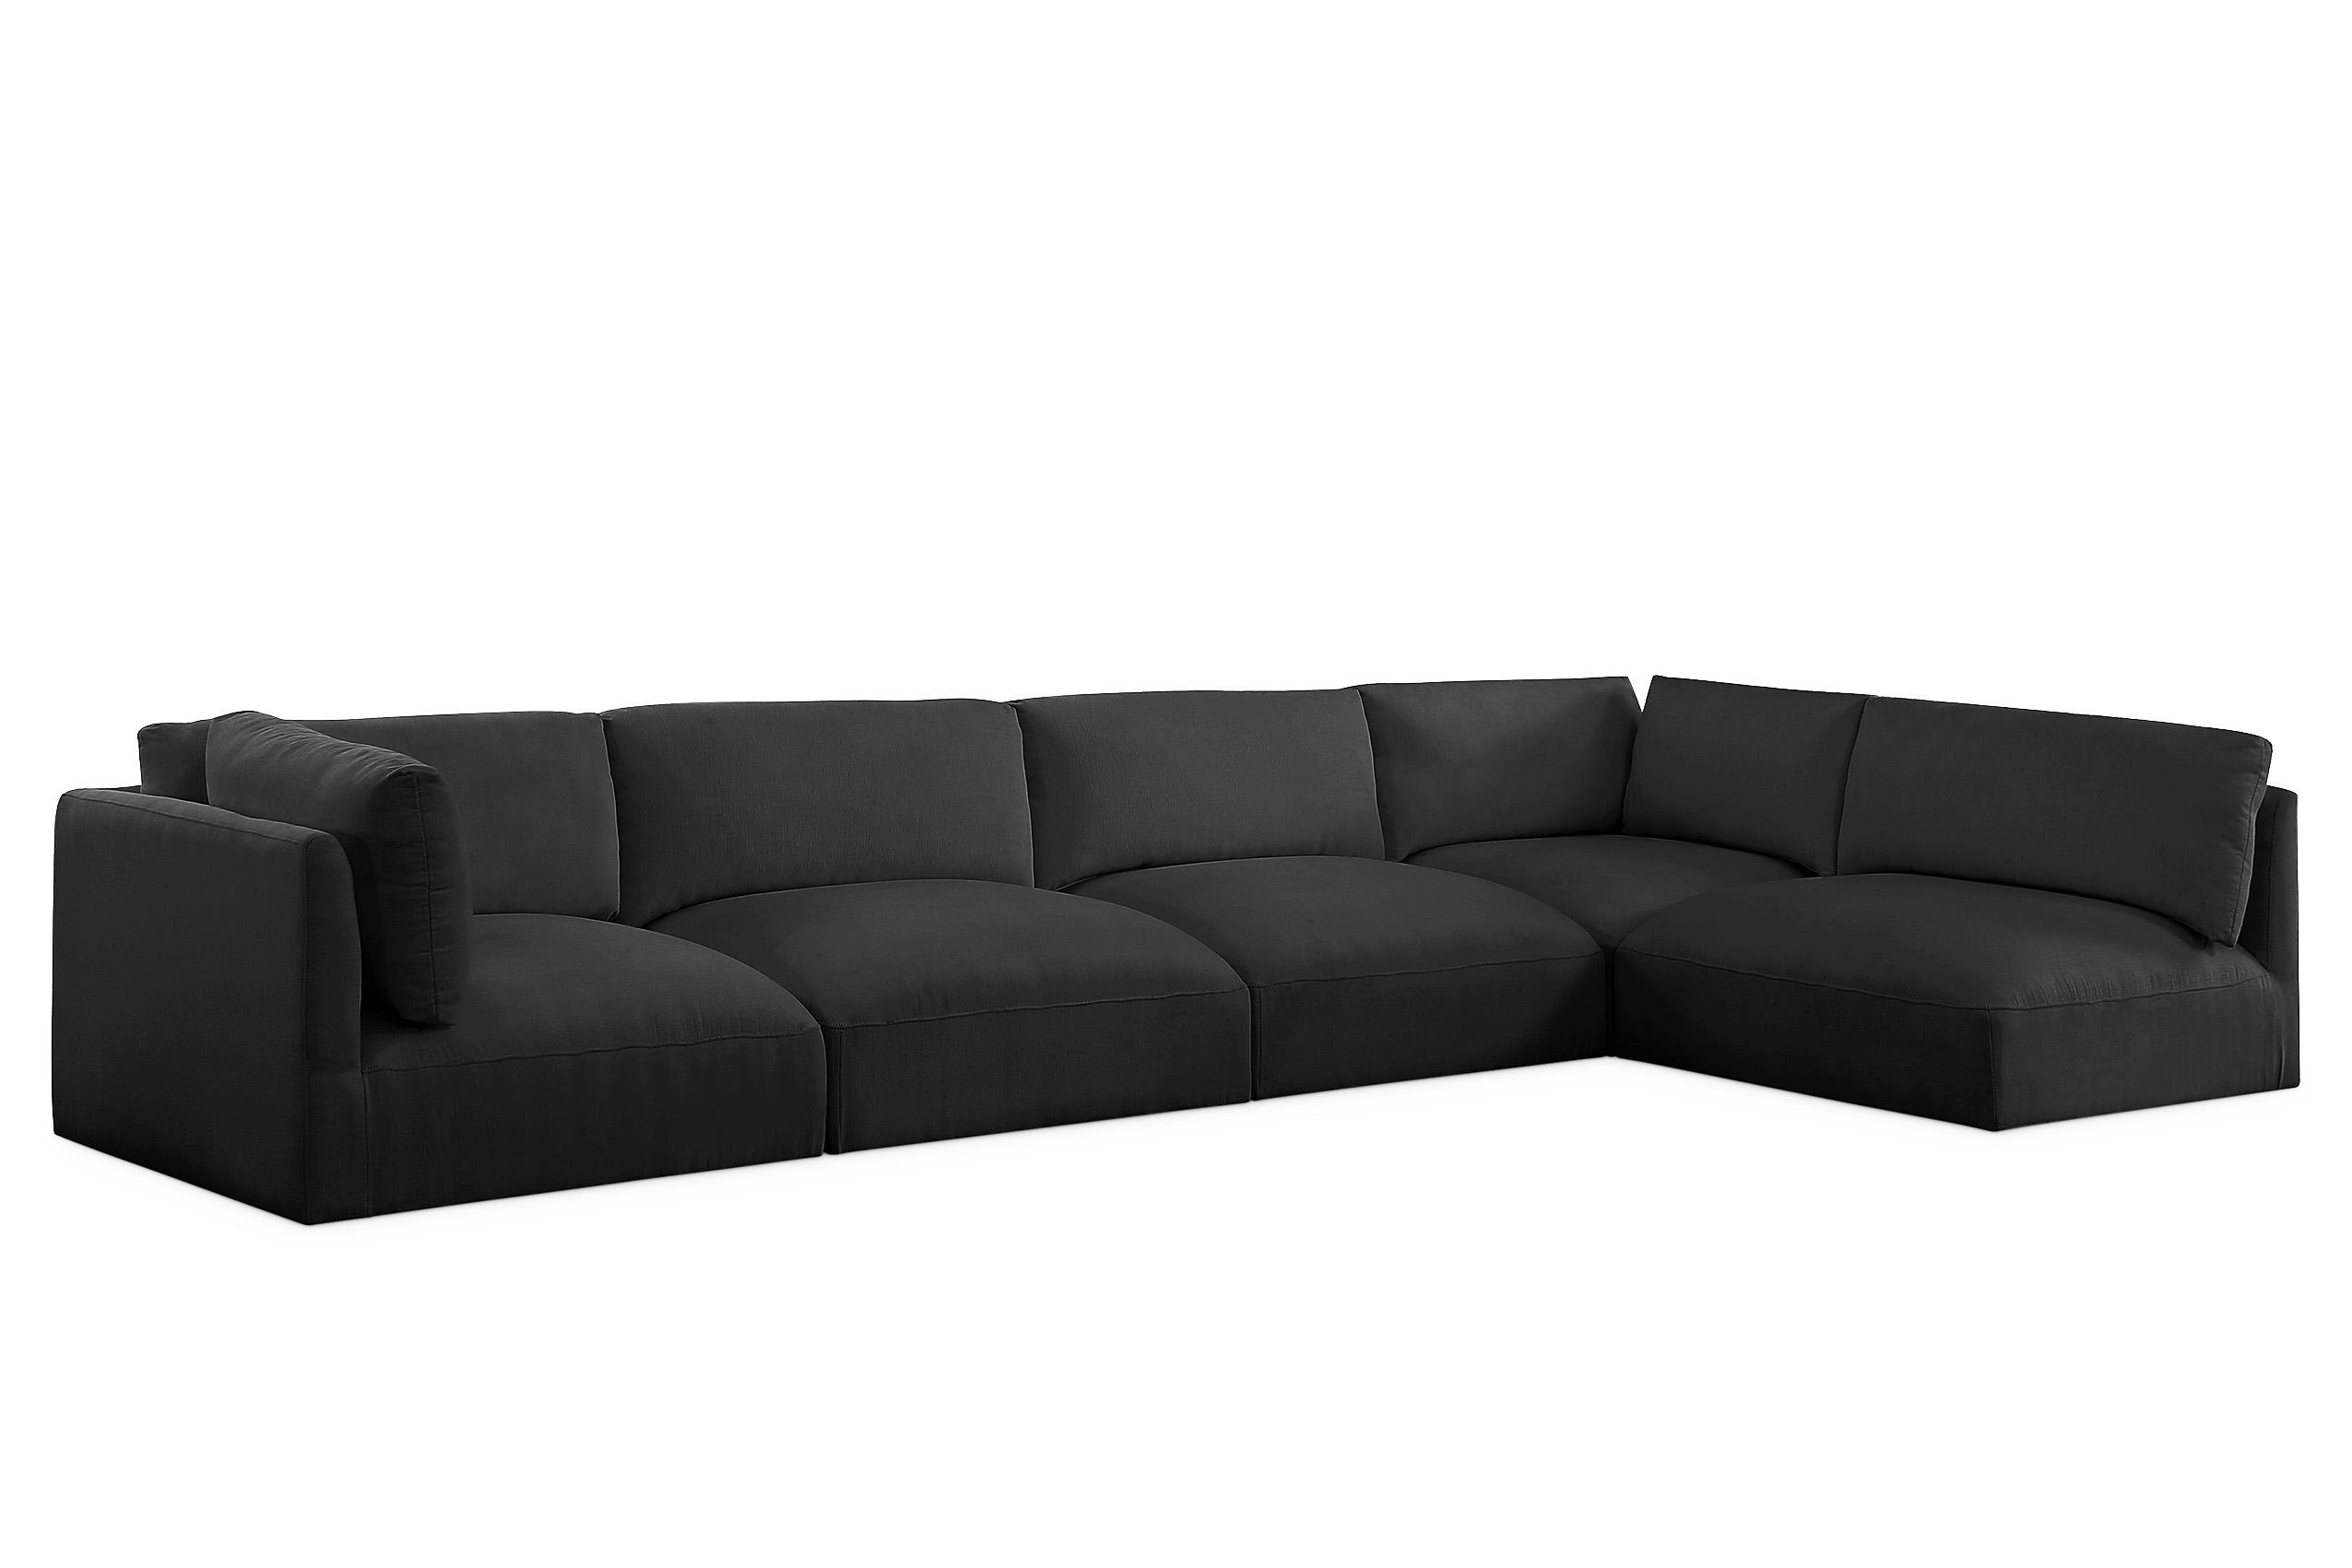 Contemporary, Modern Modular Sectional Sofa EASE 696Black-Sec5B 696Black-Sec5B in Black Fabric